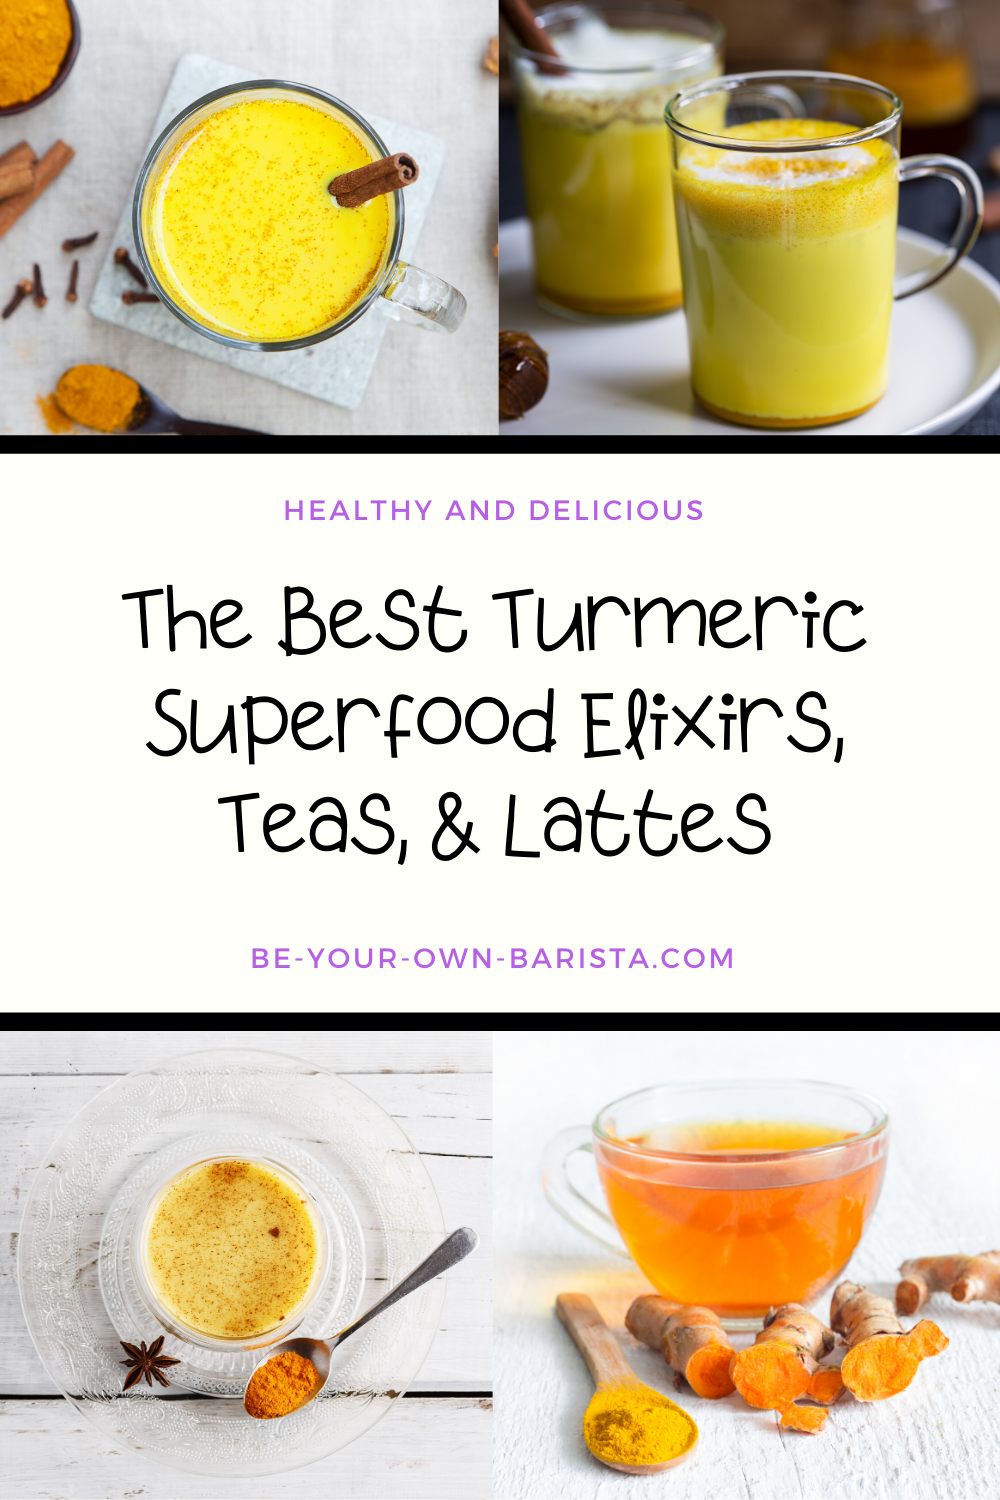 The Best Turmeric Superfood Elixirs, Teas, & Lattes